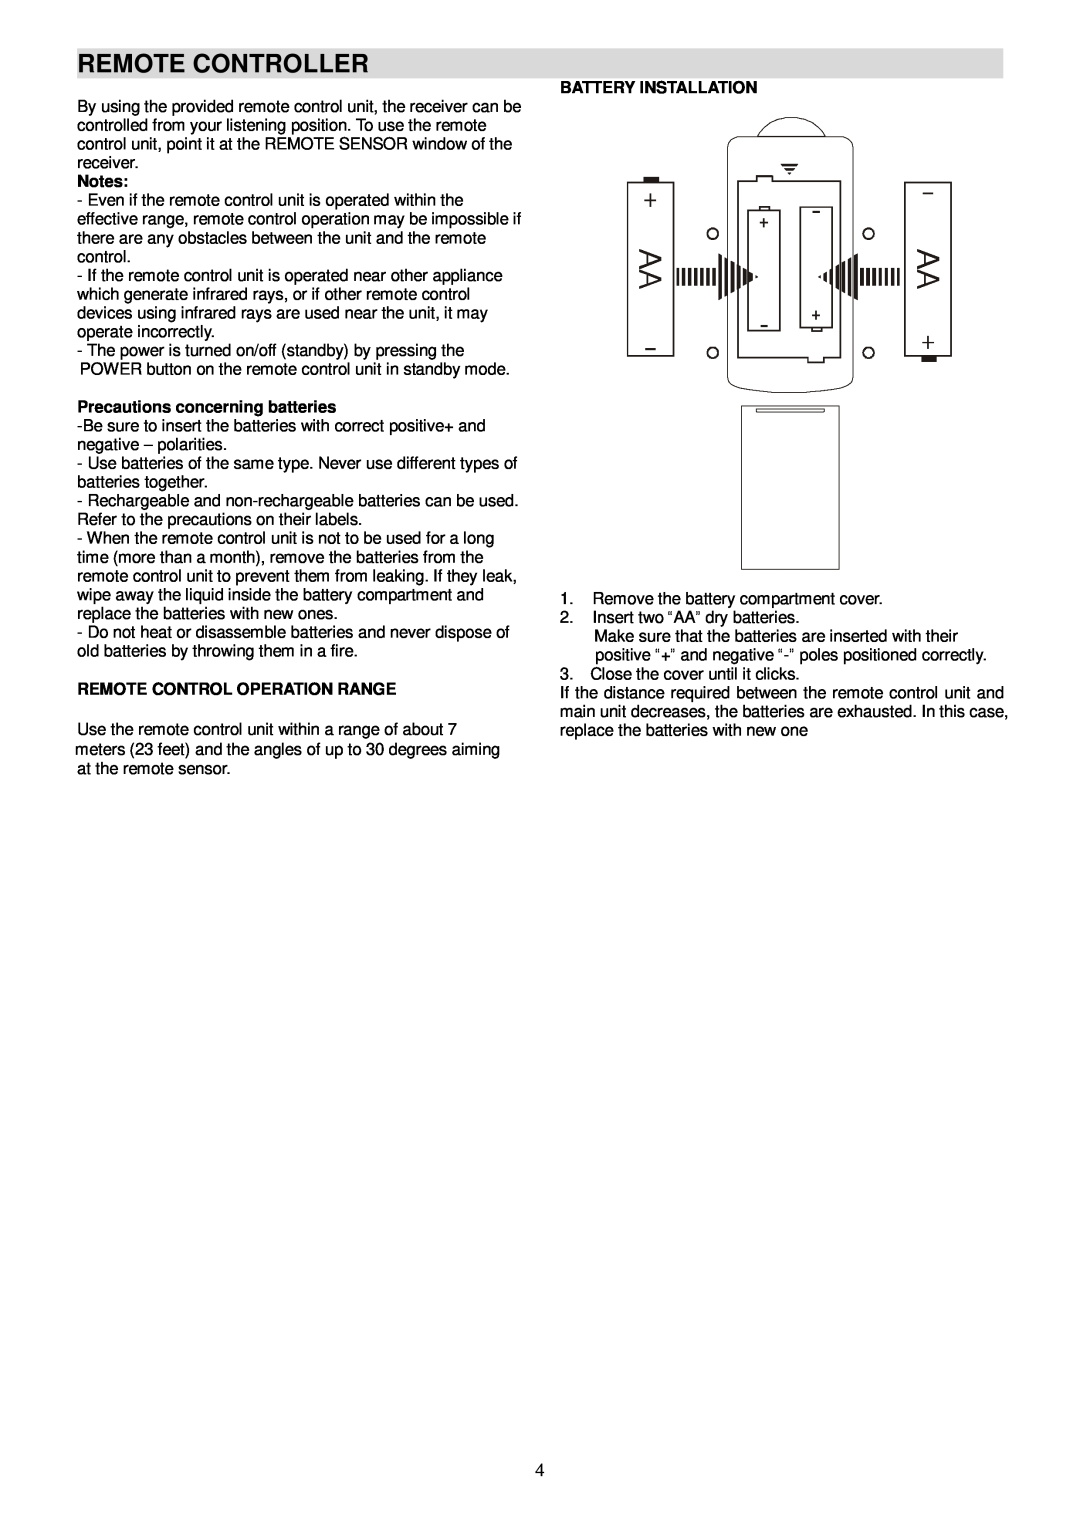 Radio Shack PT-990A manual Remote Controller, Precautions concerning batteries, Remote Control Operation Range 